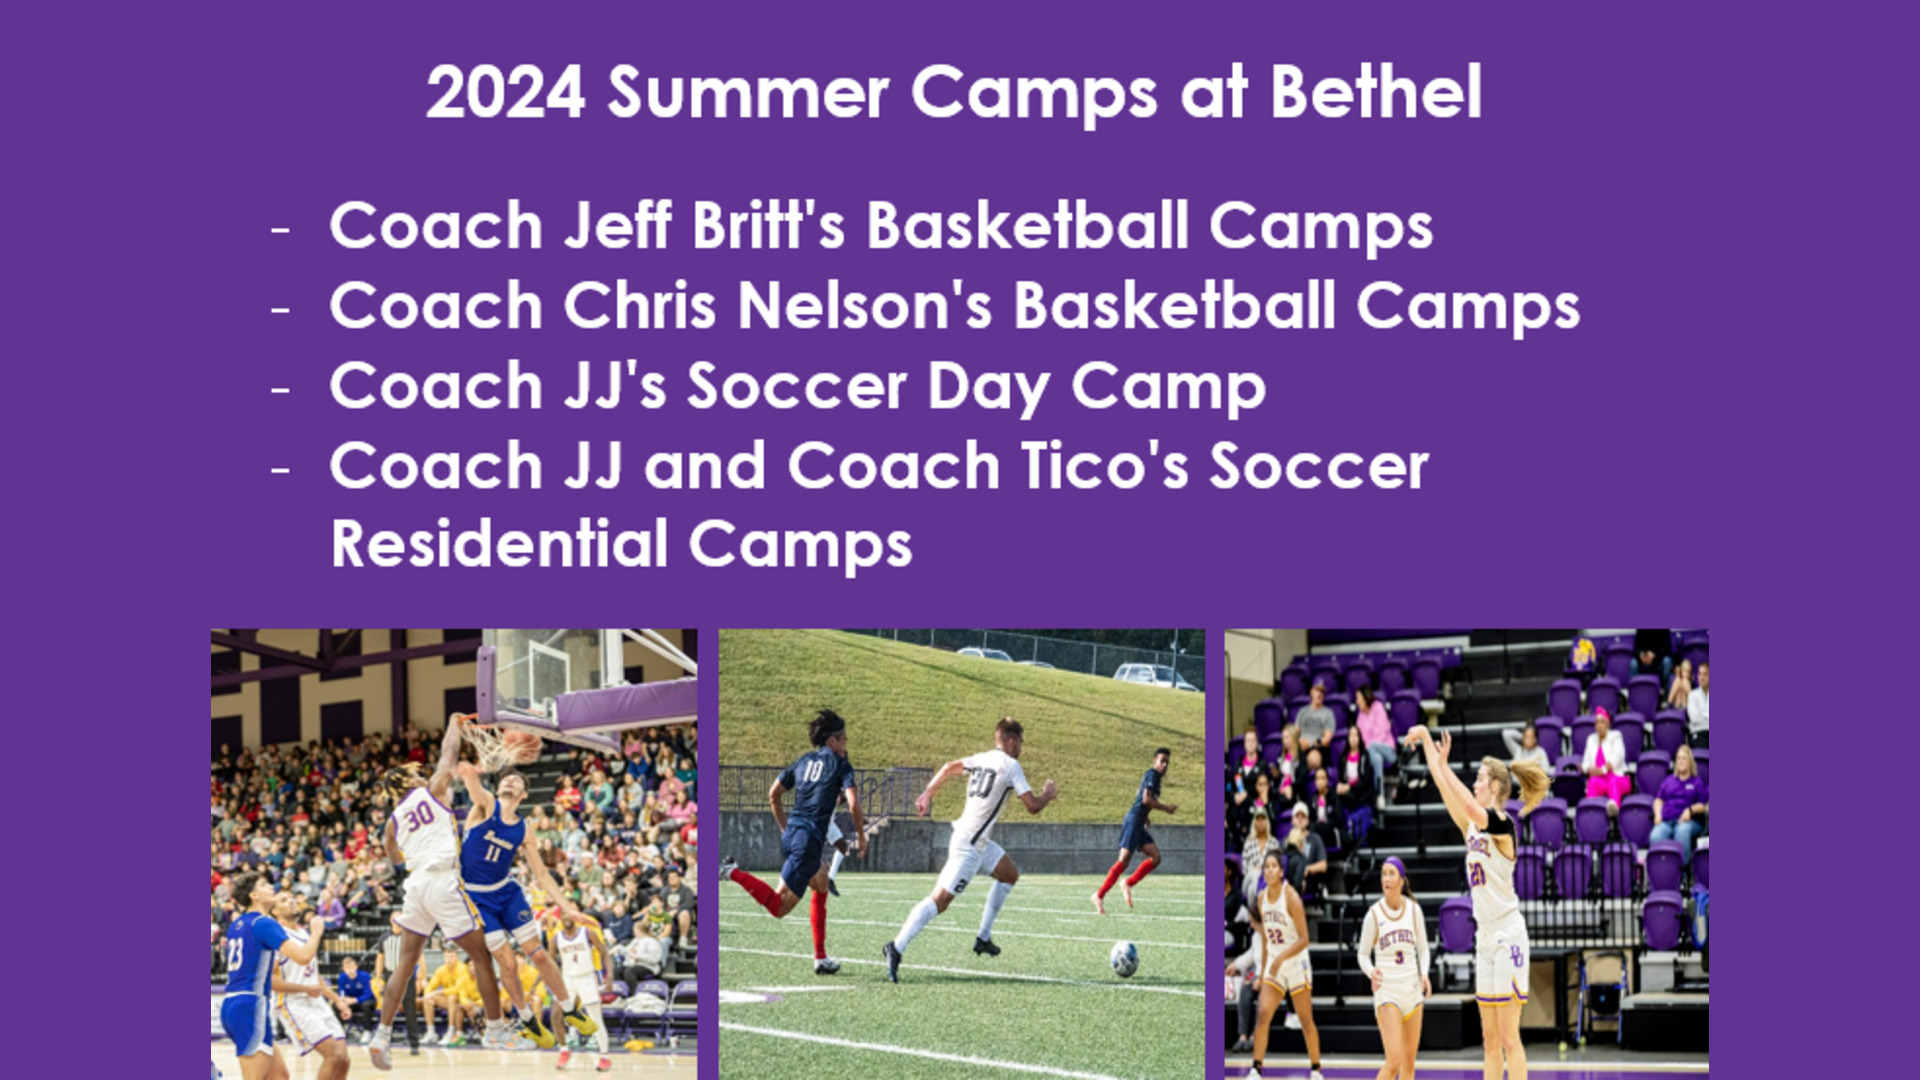 Basketball, Soccer Summer Camps Scheduled at Bethel